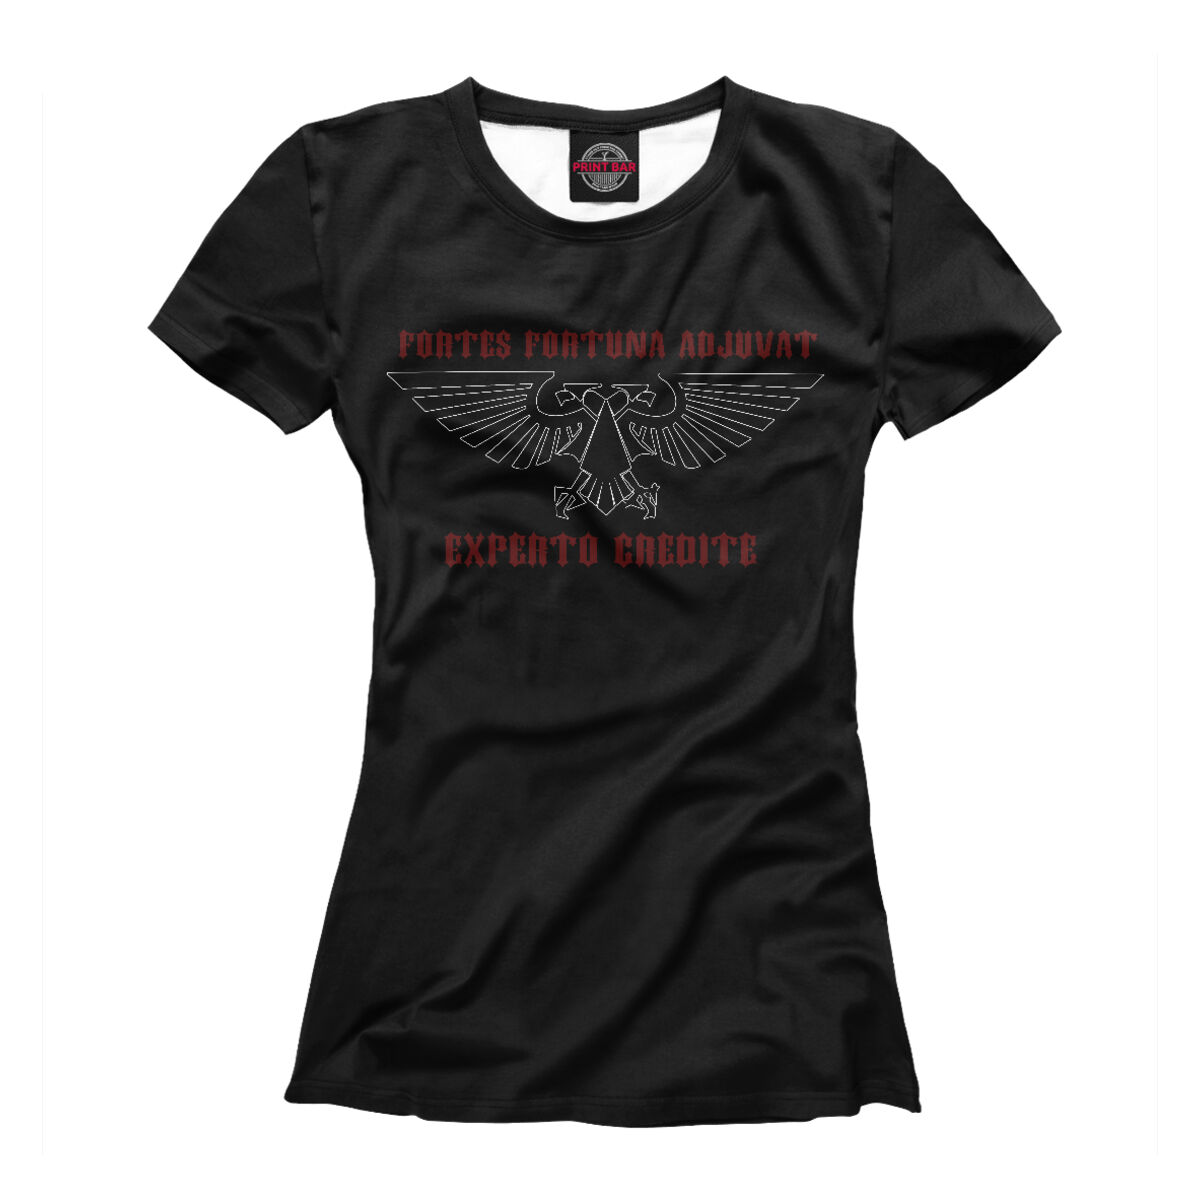 Est militare. Футболка Samurai Cyberpunk 2077. 2pac Shakur футболка. Carach Angren футболка.